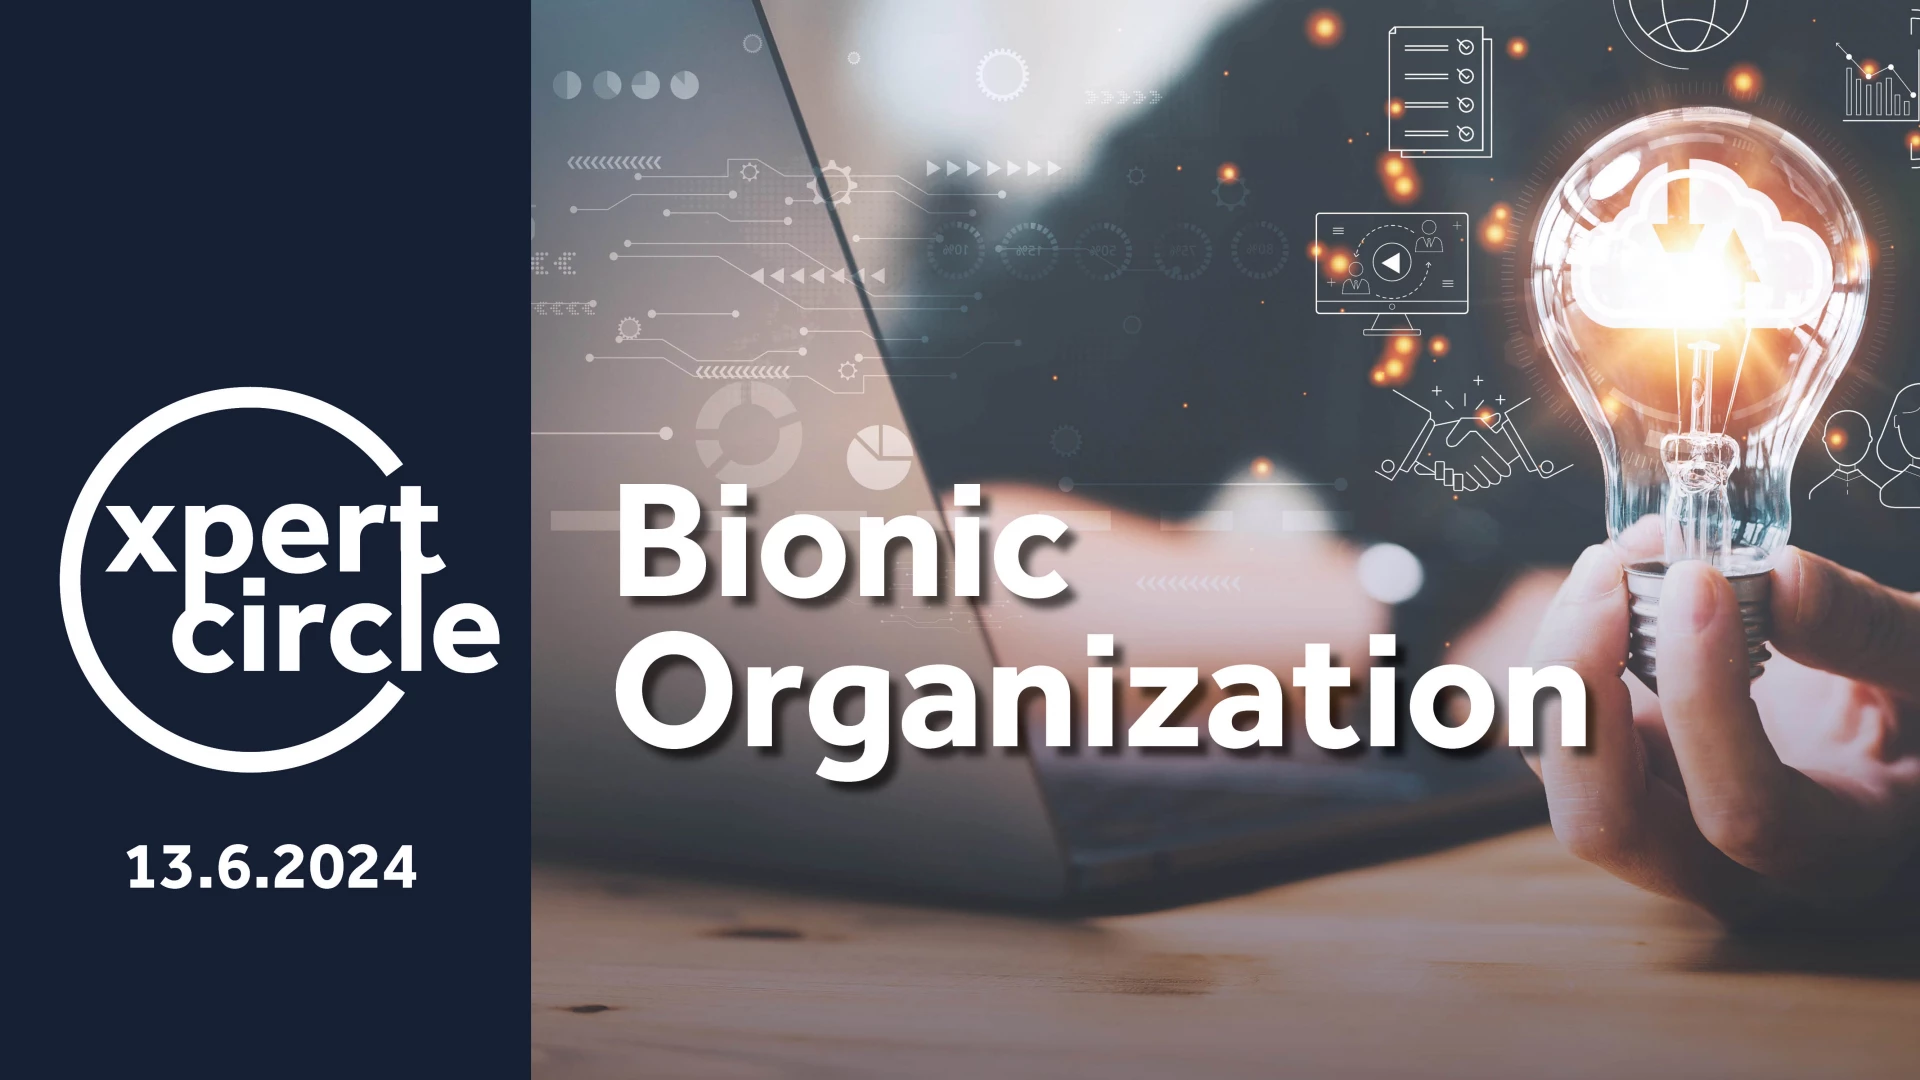 Bionic Organizations